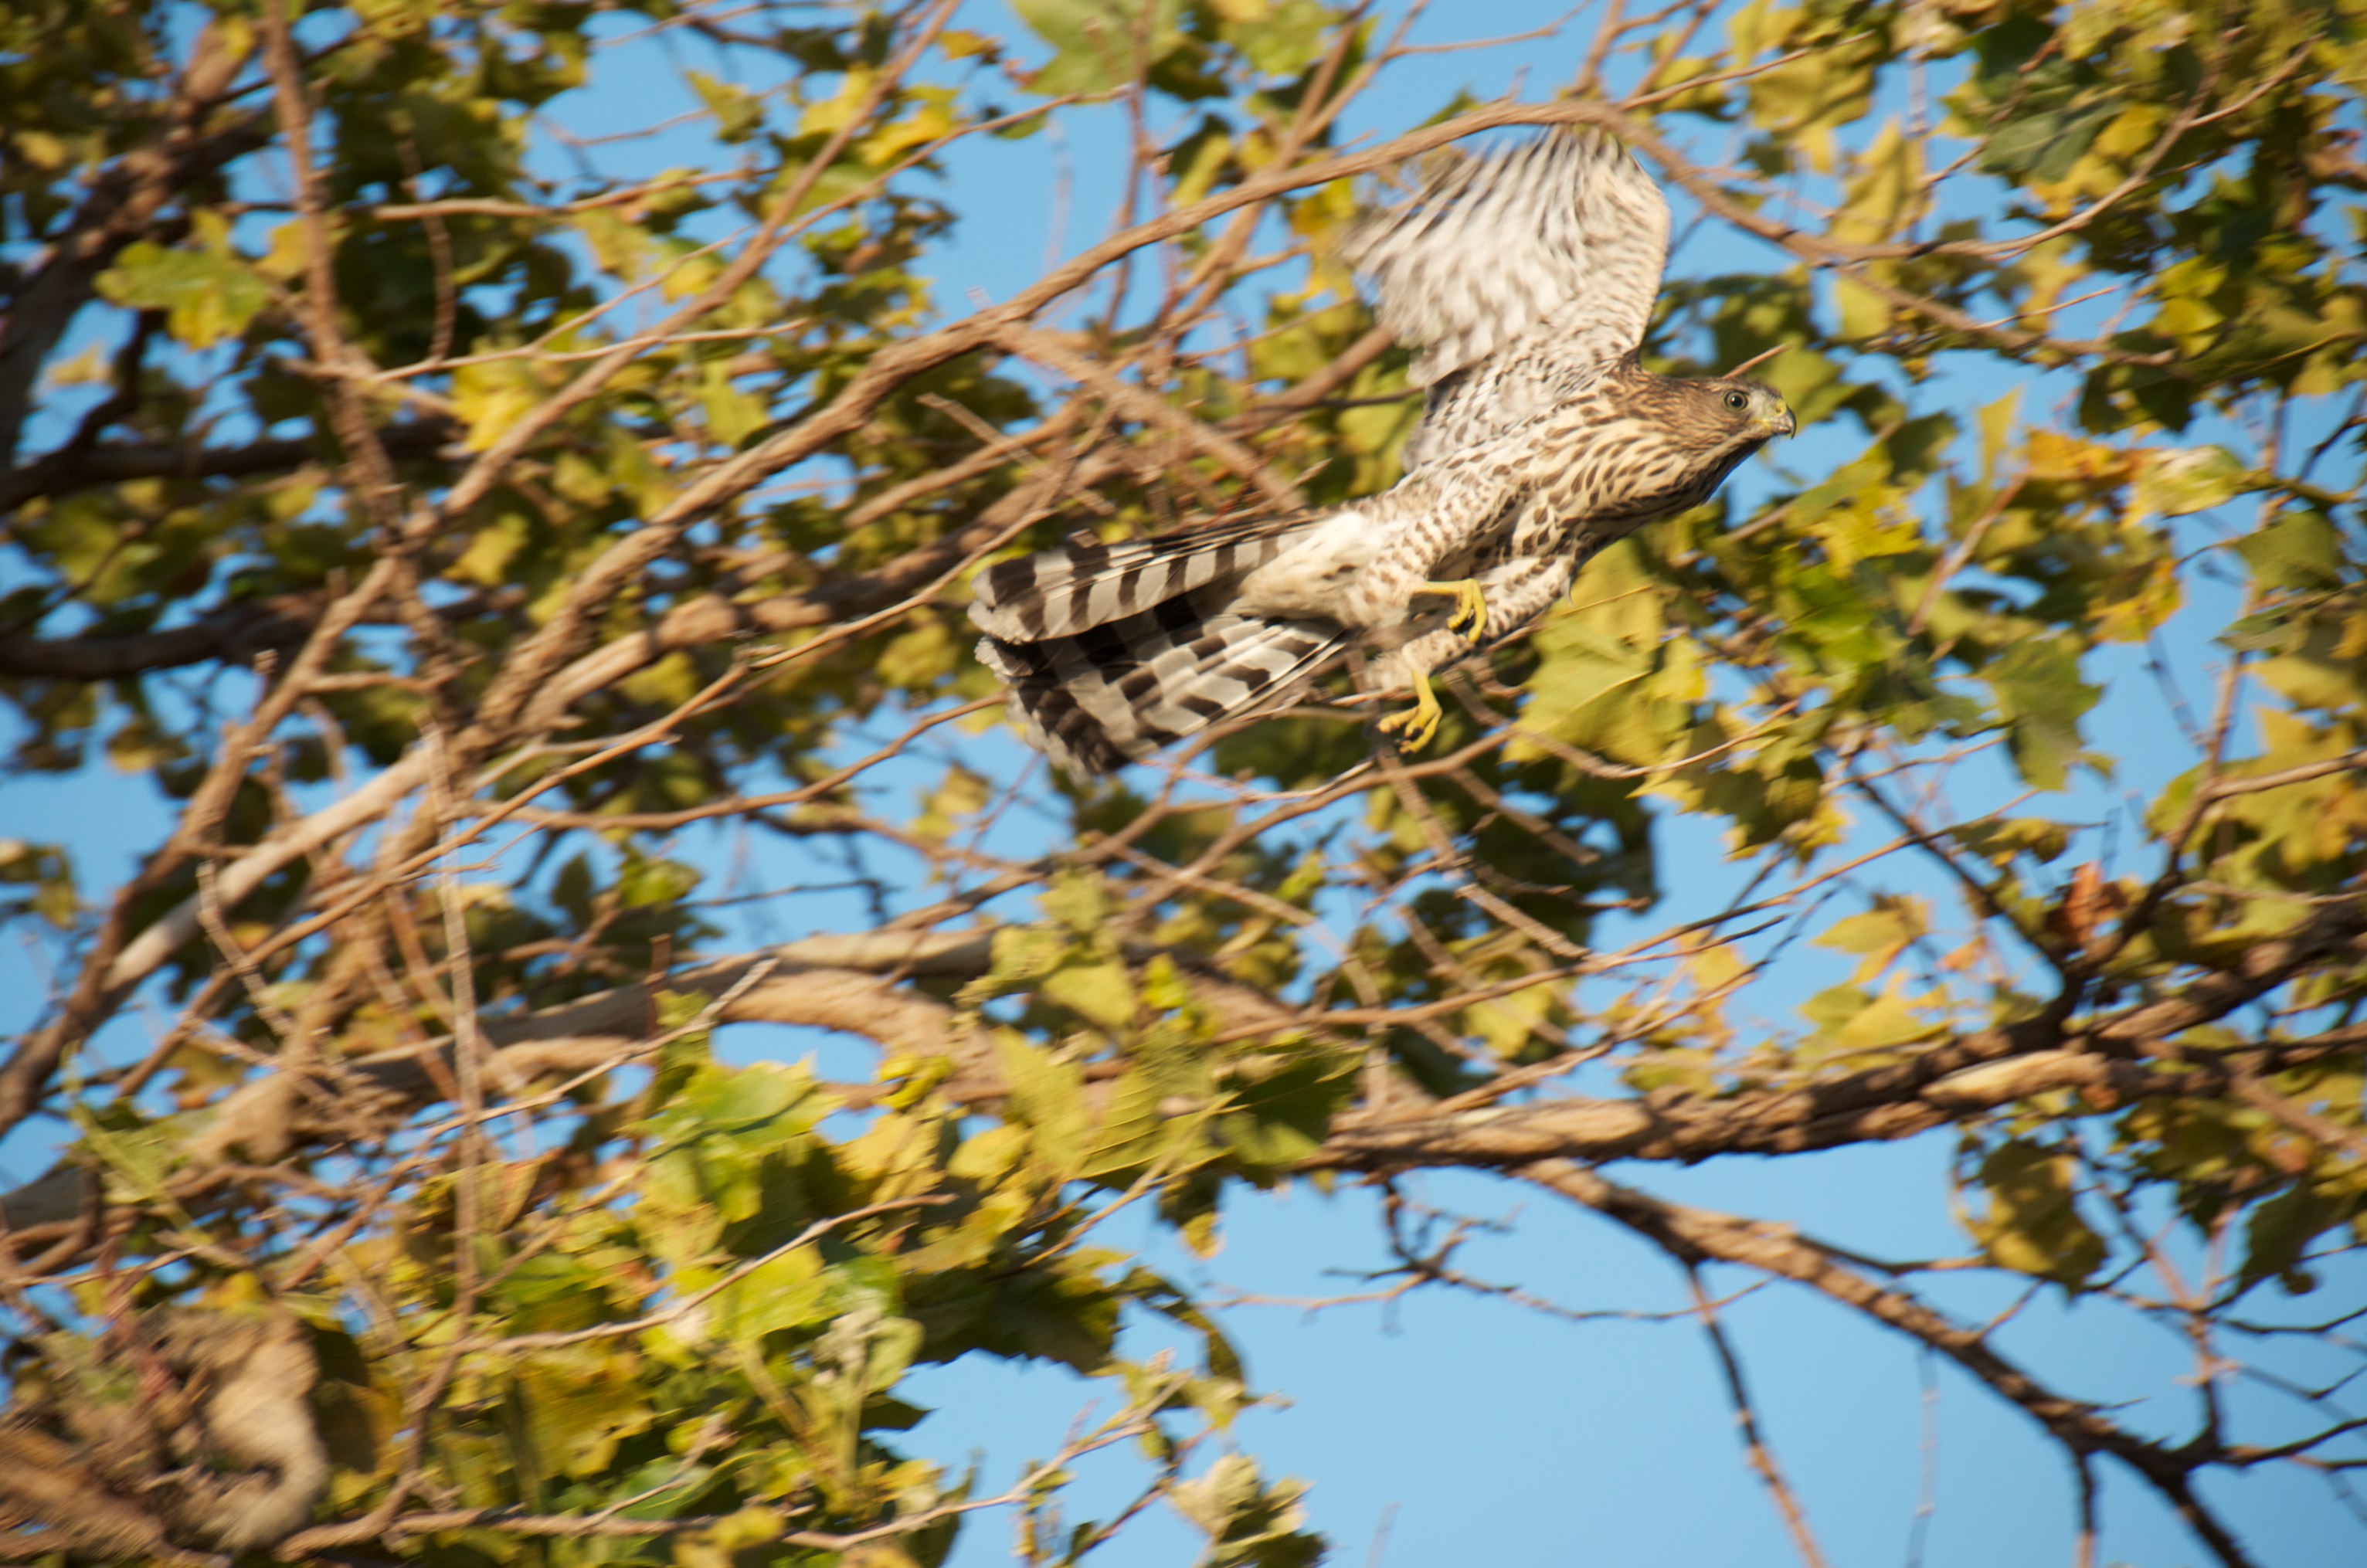 Hawk taking flight from tree